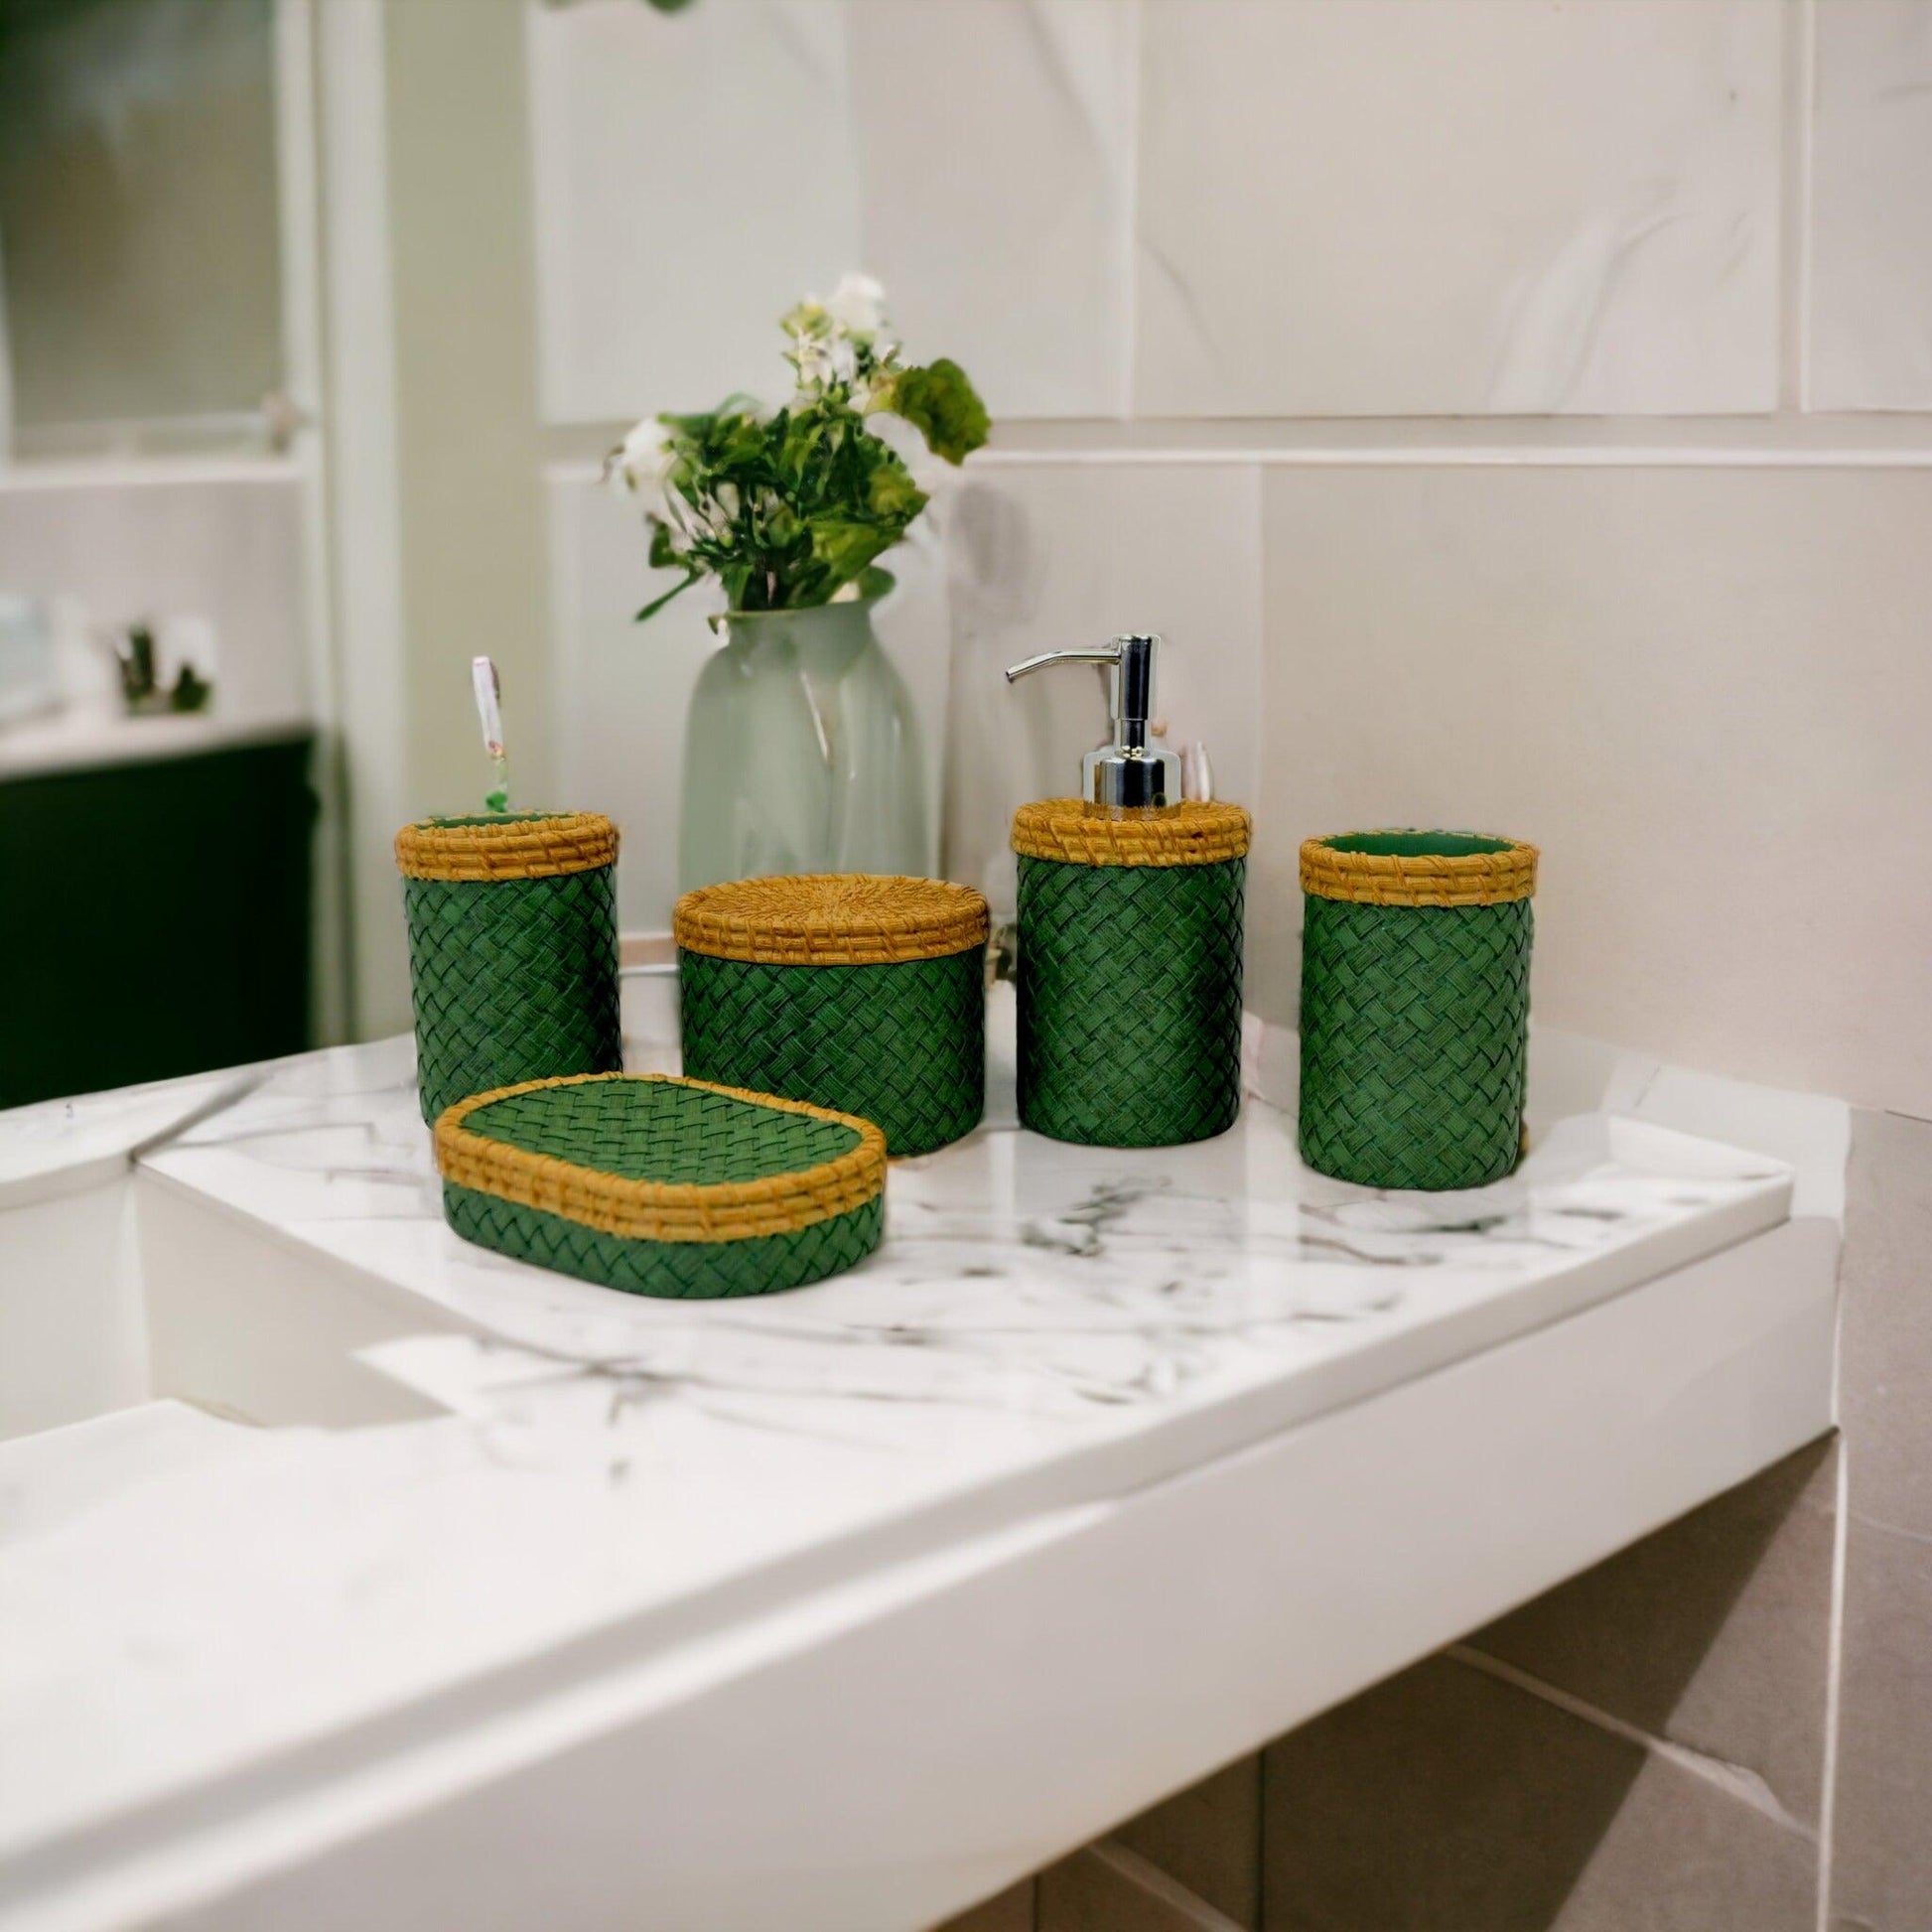 5-Piece Bath Set in Beige & Green Color- Nature Home Decor